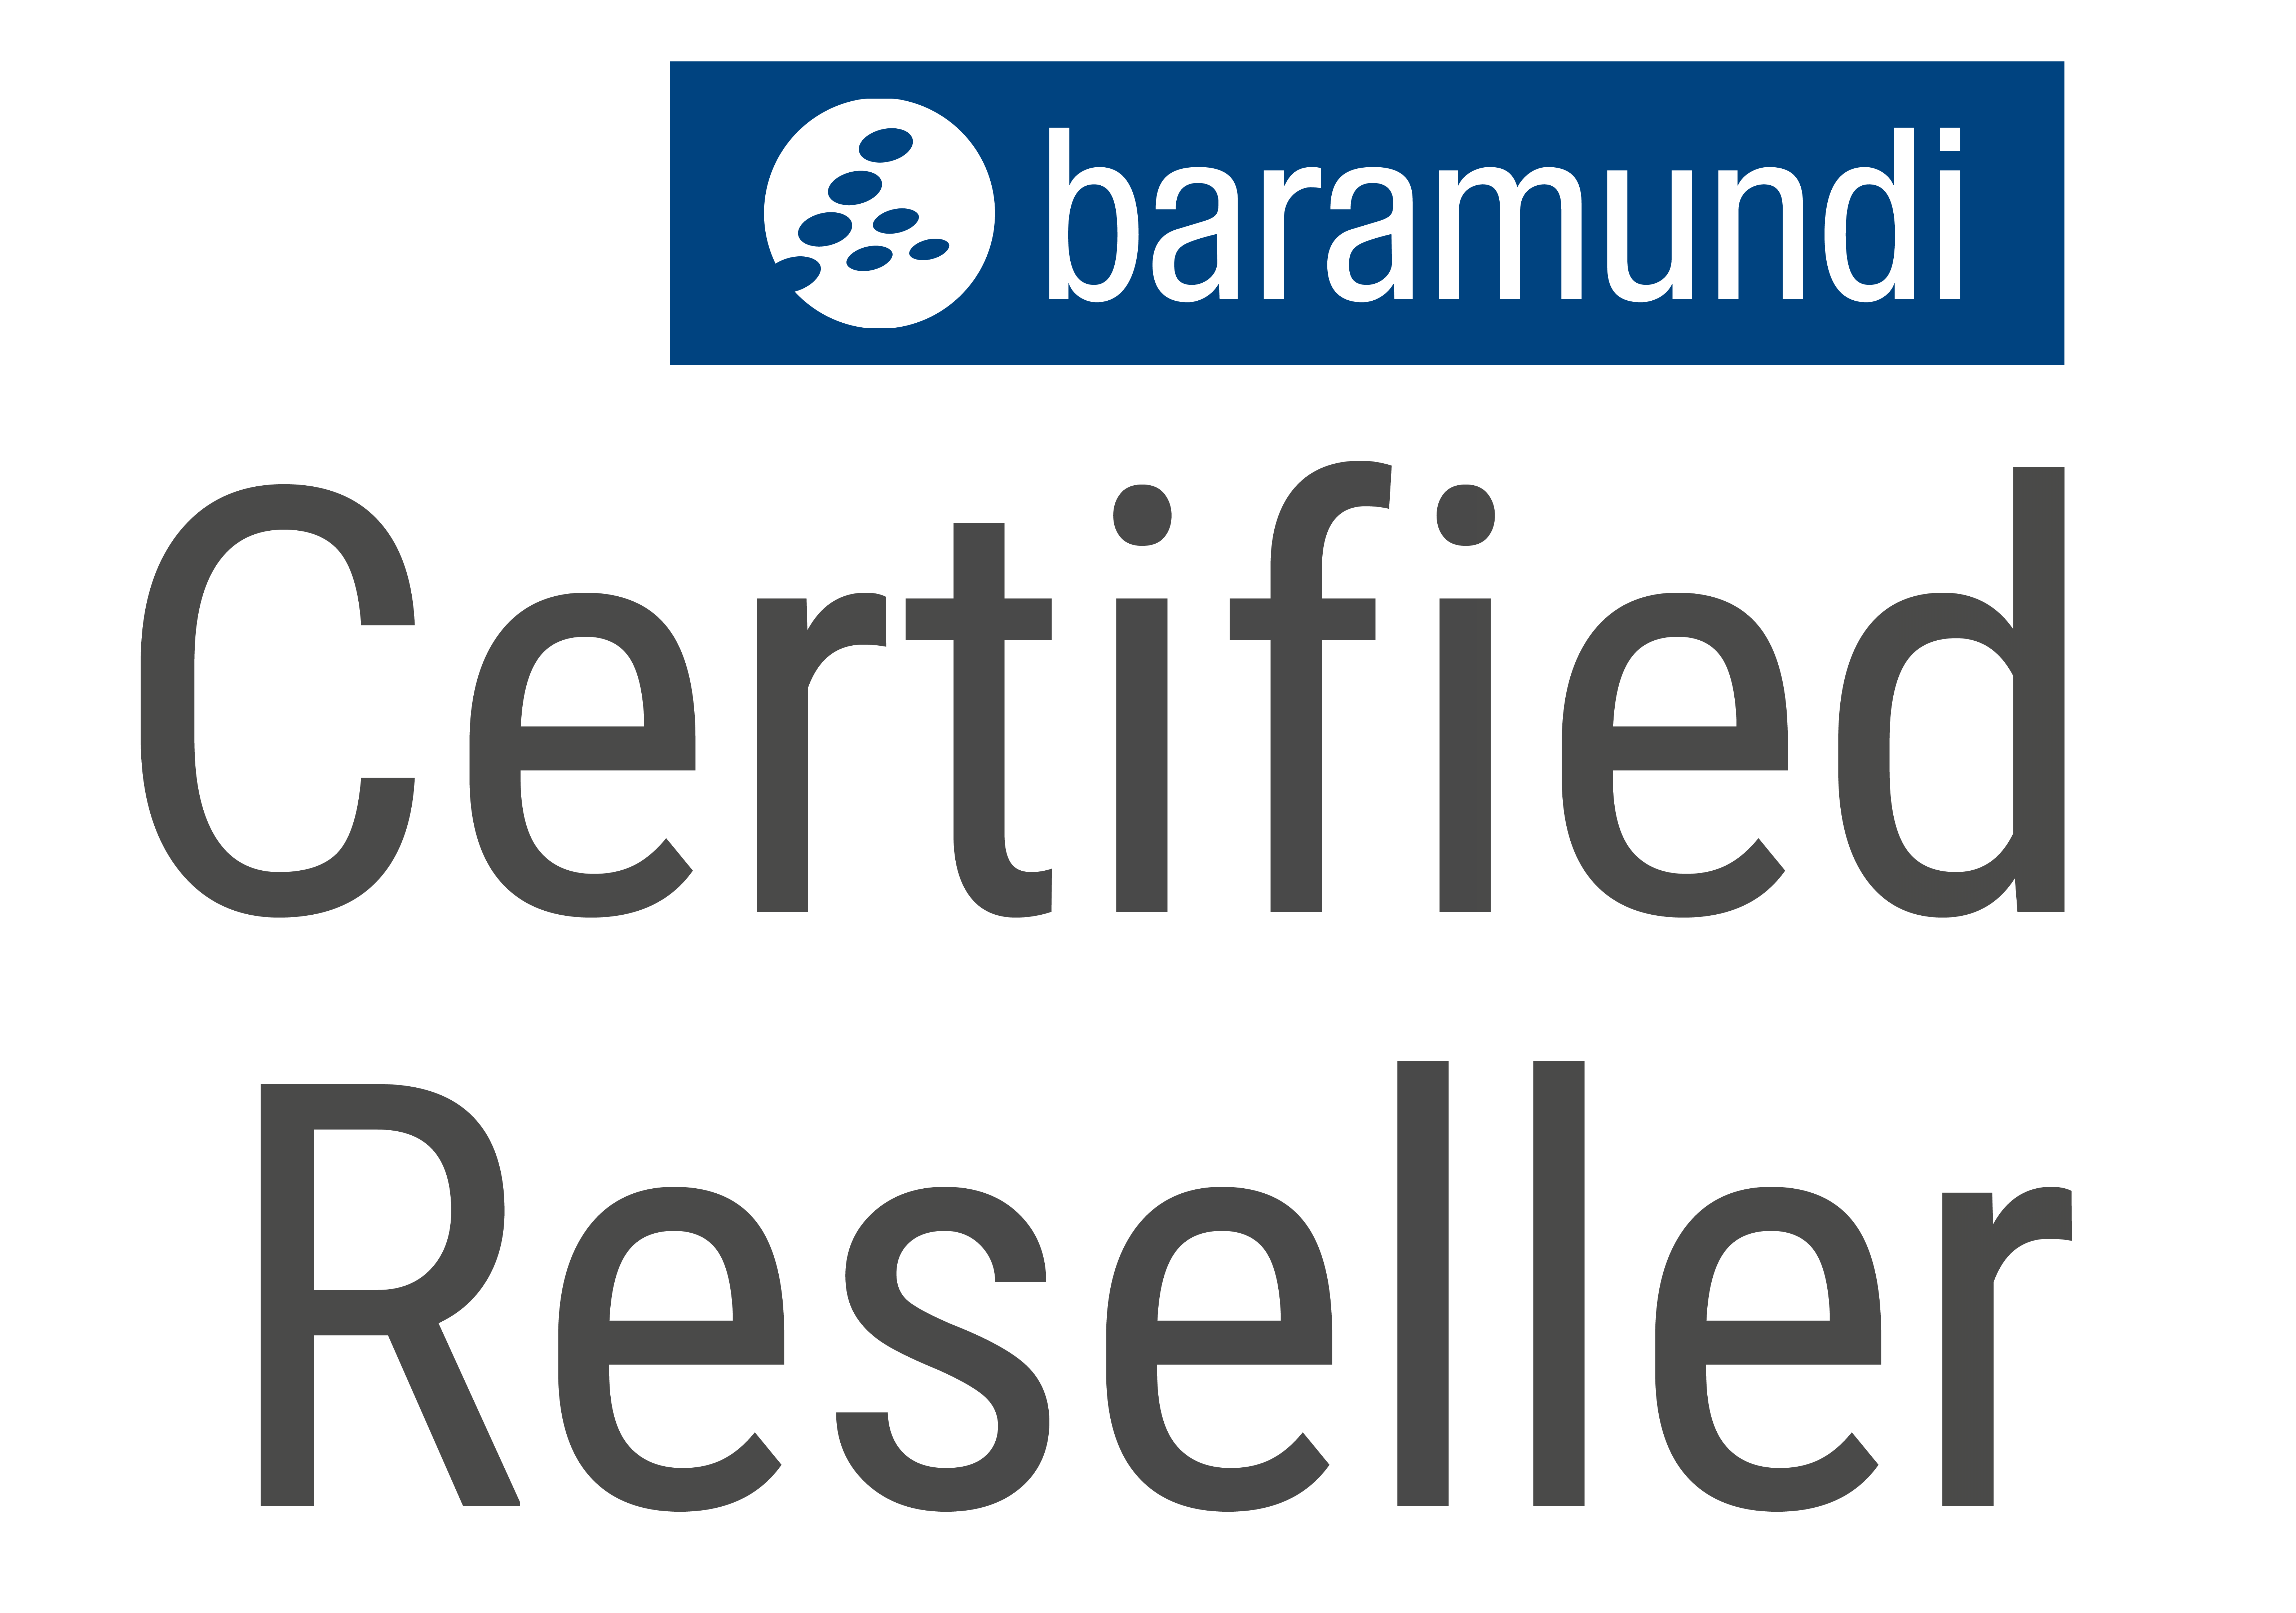 Baramundi Certified Reseller Partner Logo